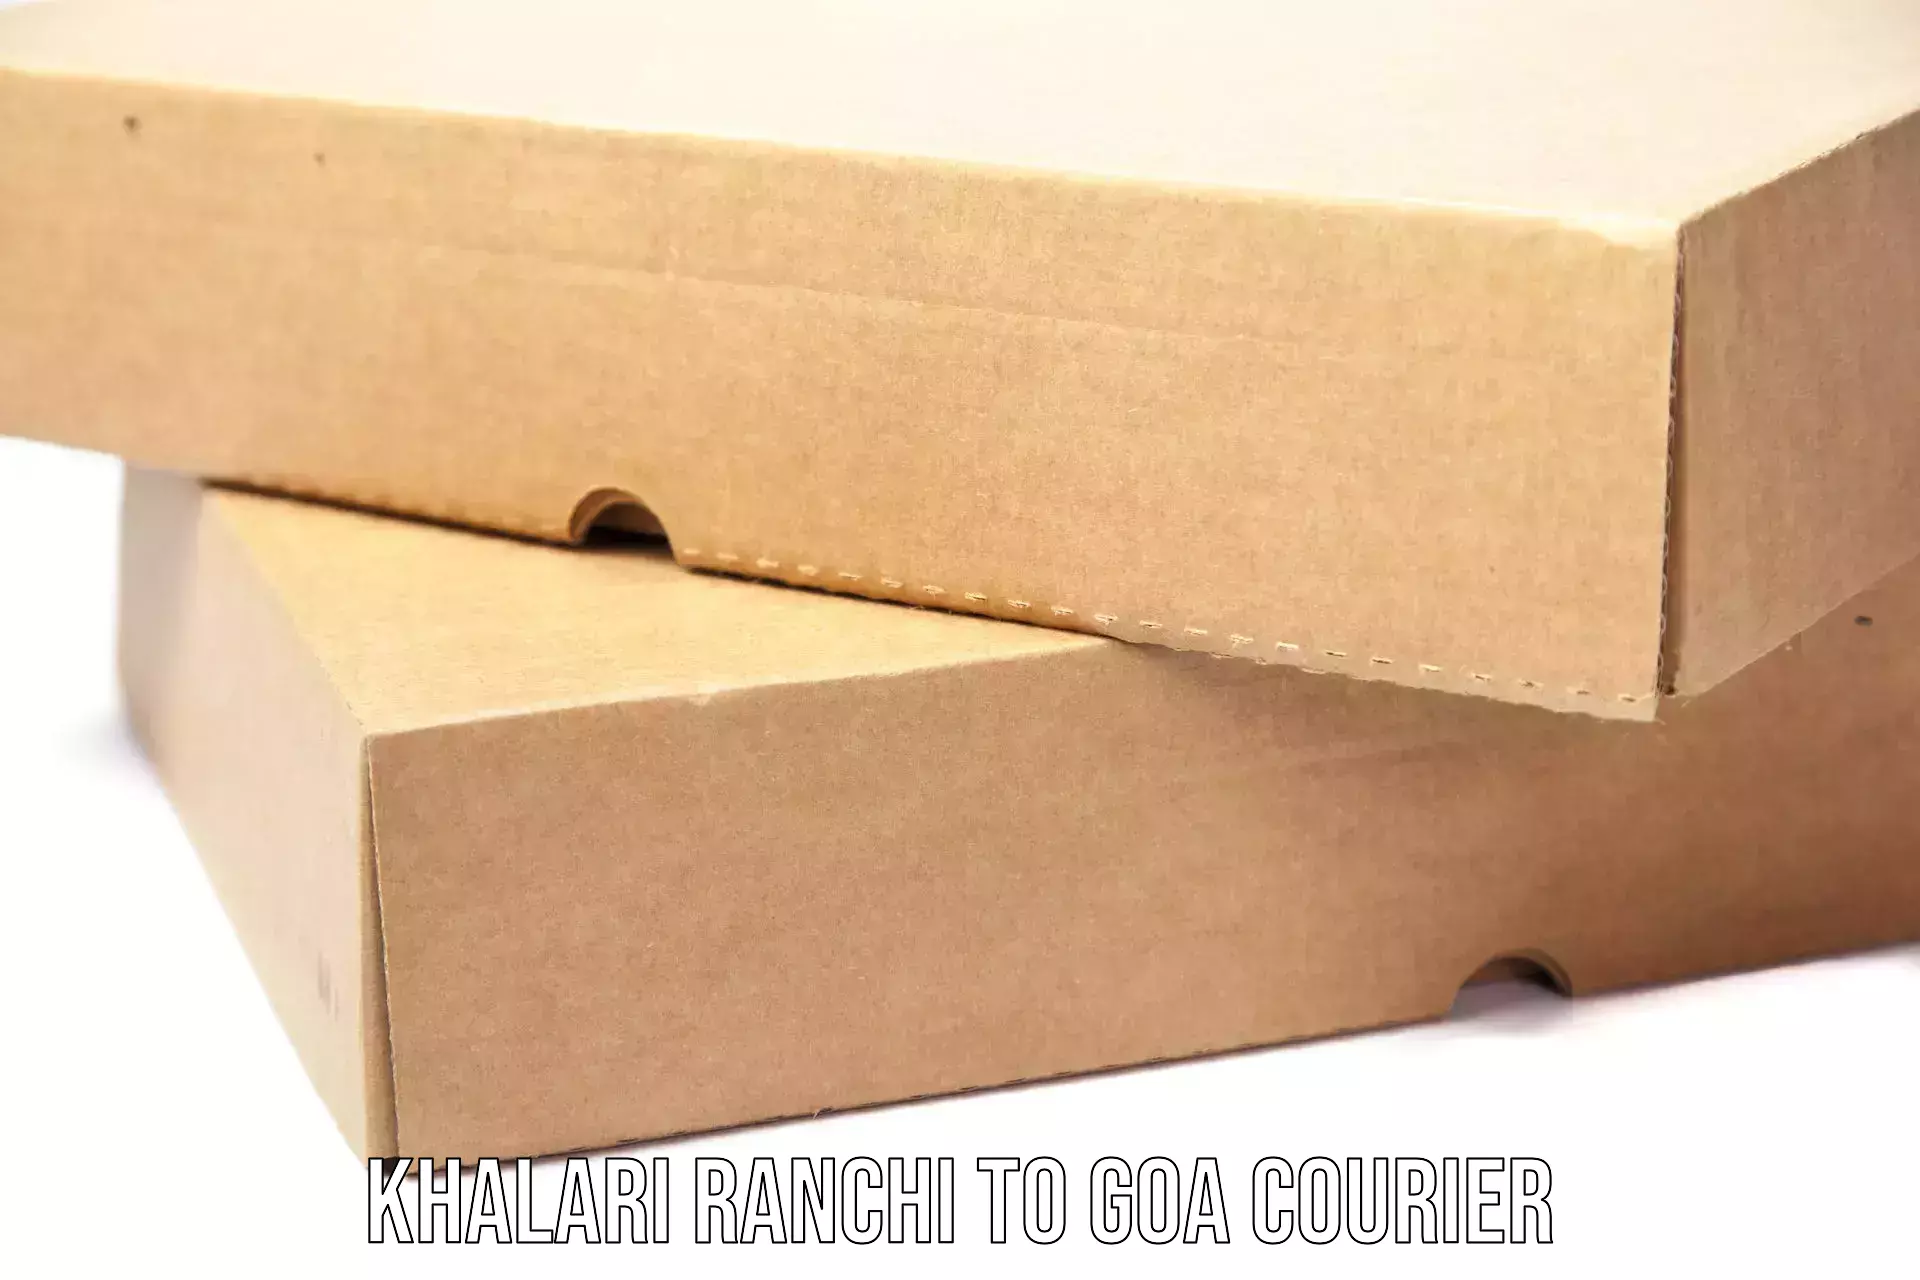 Cash on delivery service Khalari Ranchi to Margao